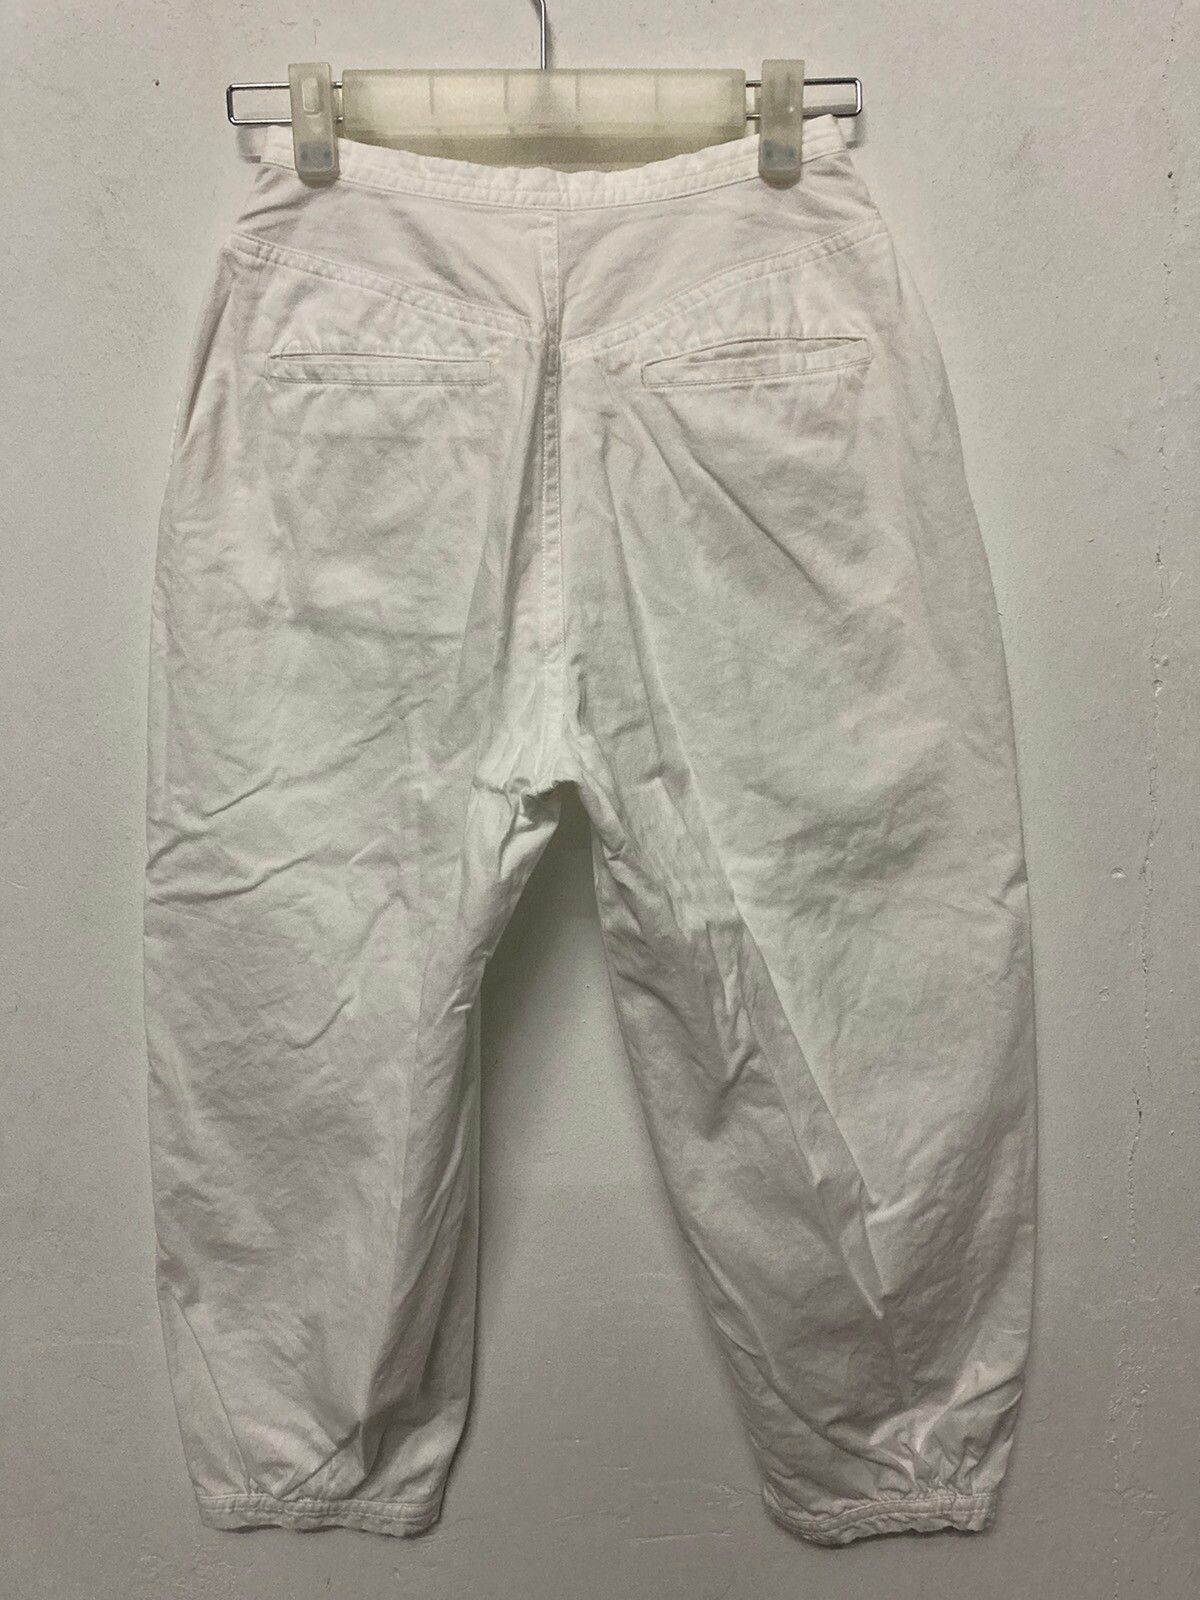 Yohji Yamamoto Y’s High Waist Crop Pants - 2